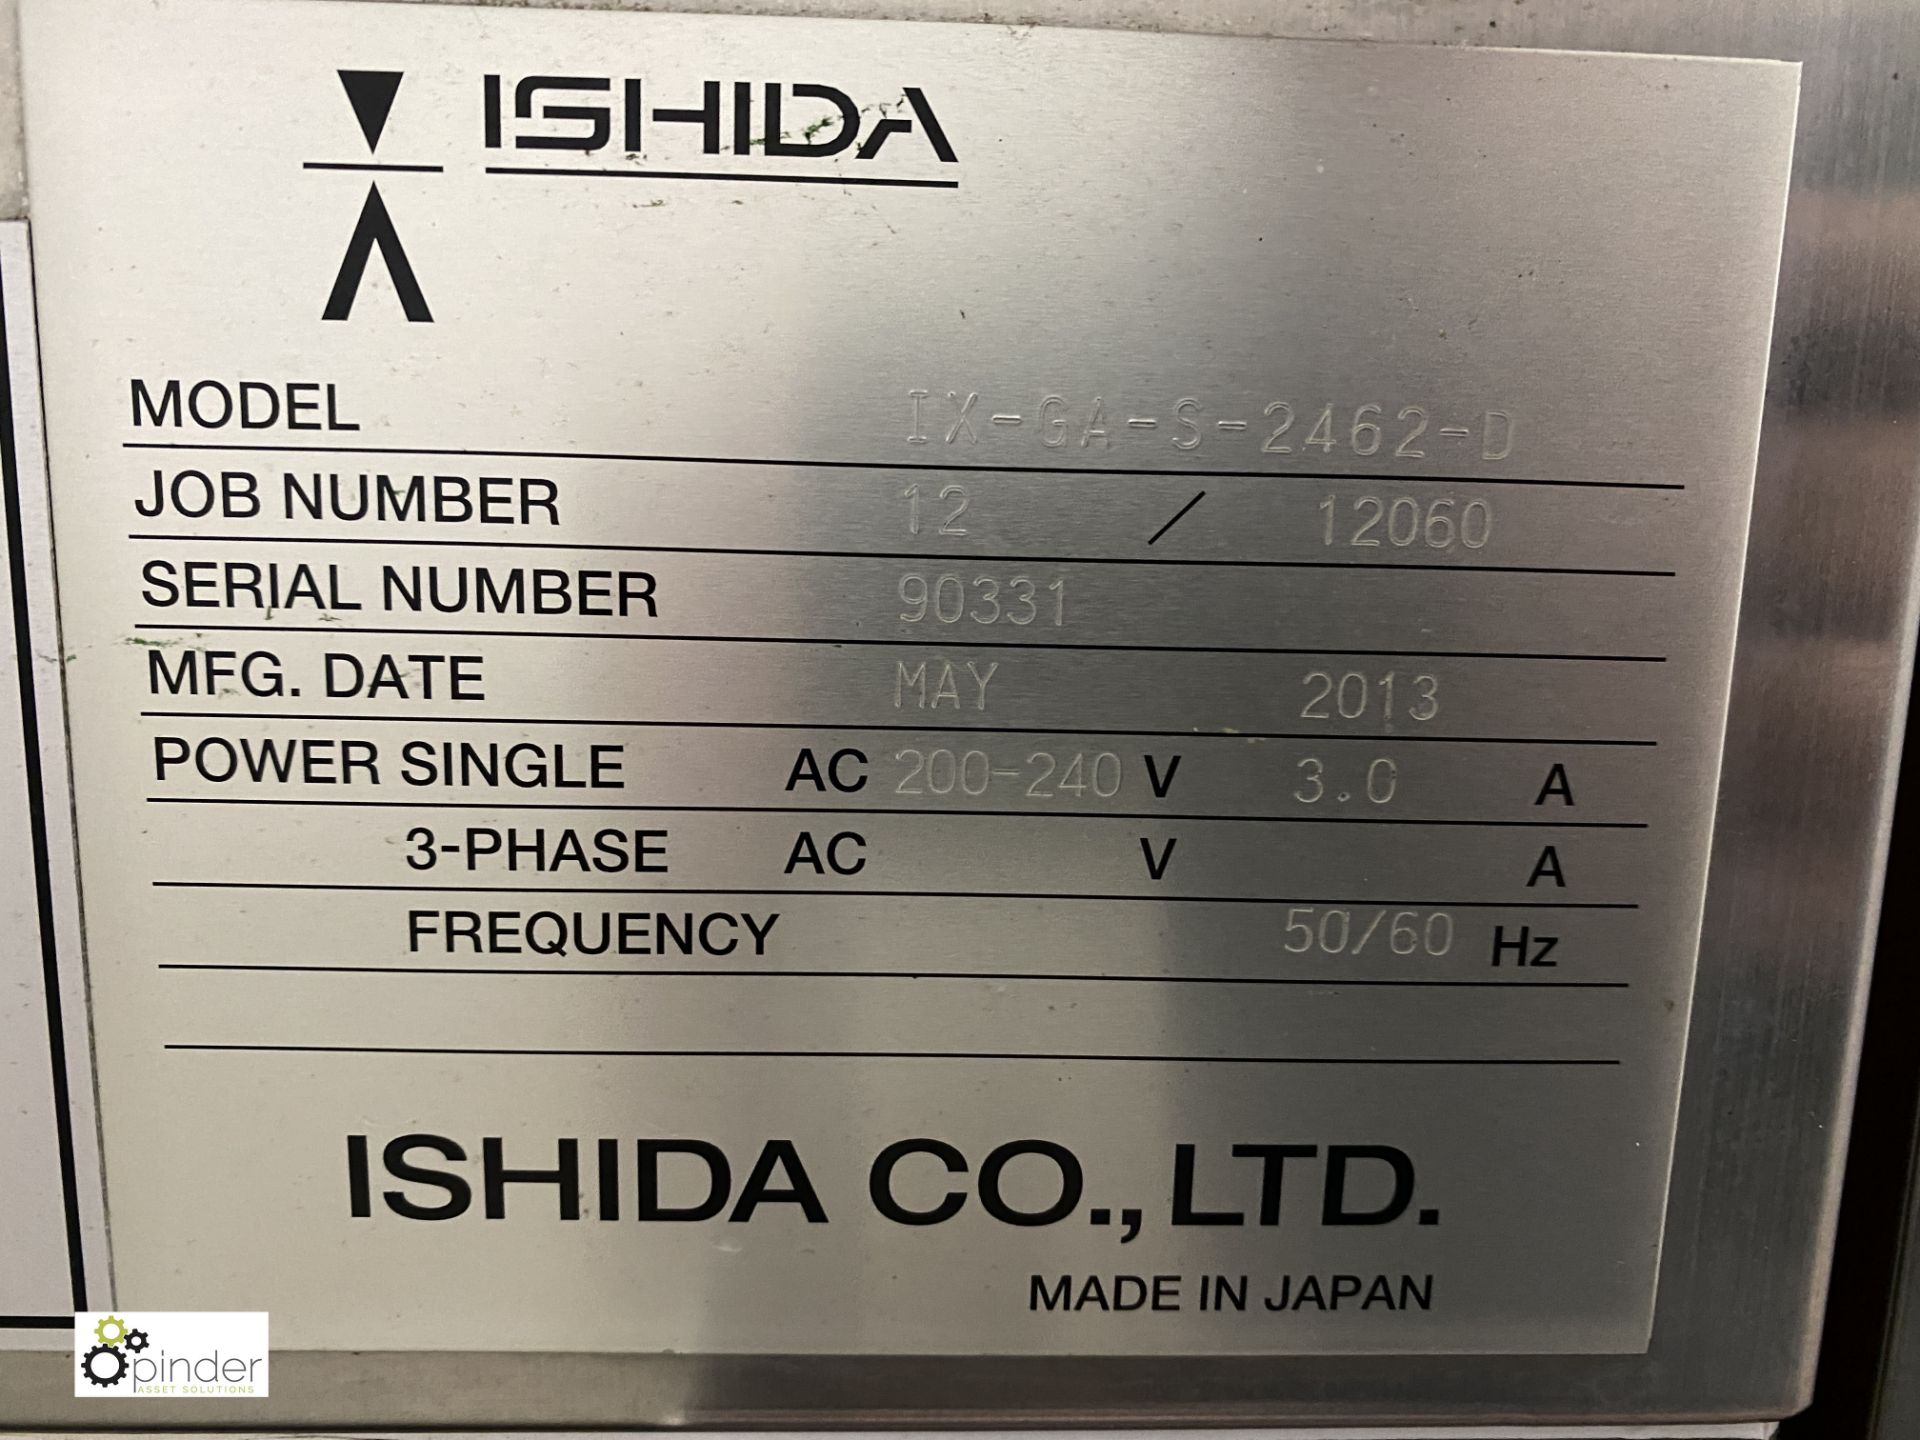 Ishida IX-GA-S-2462-D X-Ray Inspection System, 275mm belt width, year 2013, serial number 90331, - Image 7 of 7